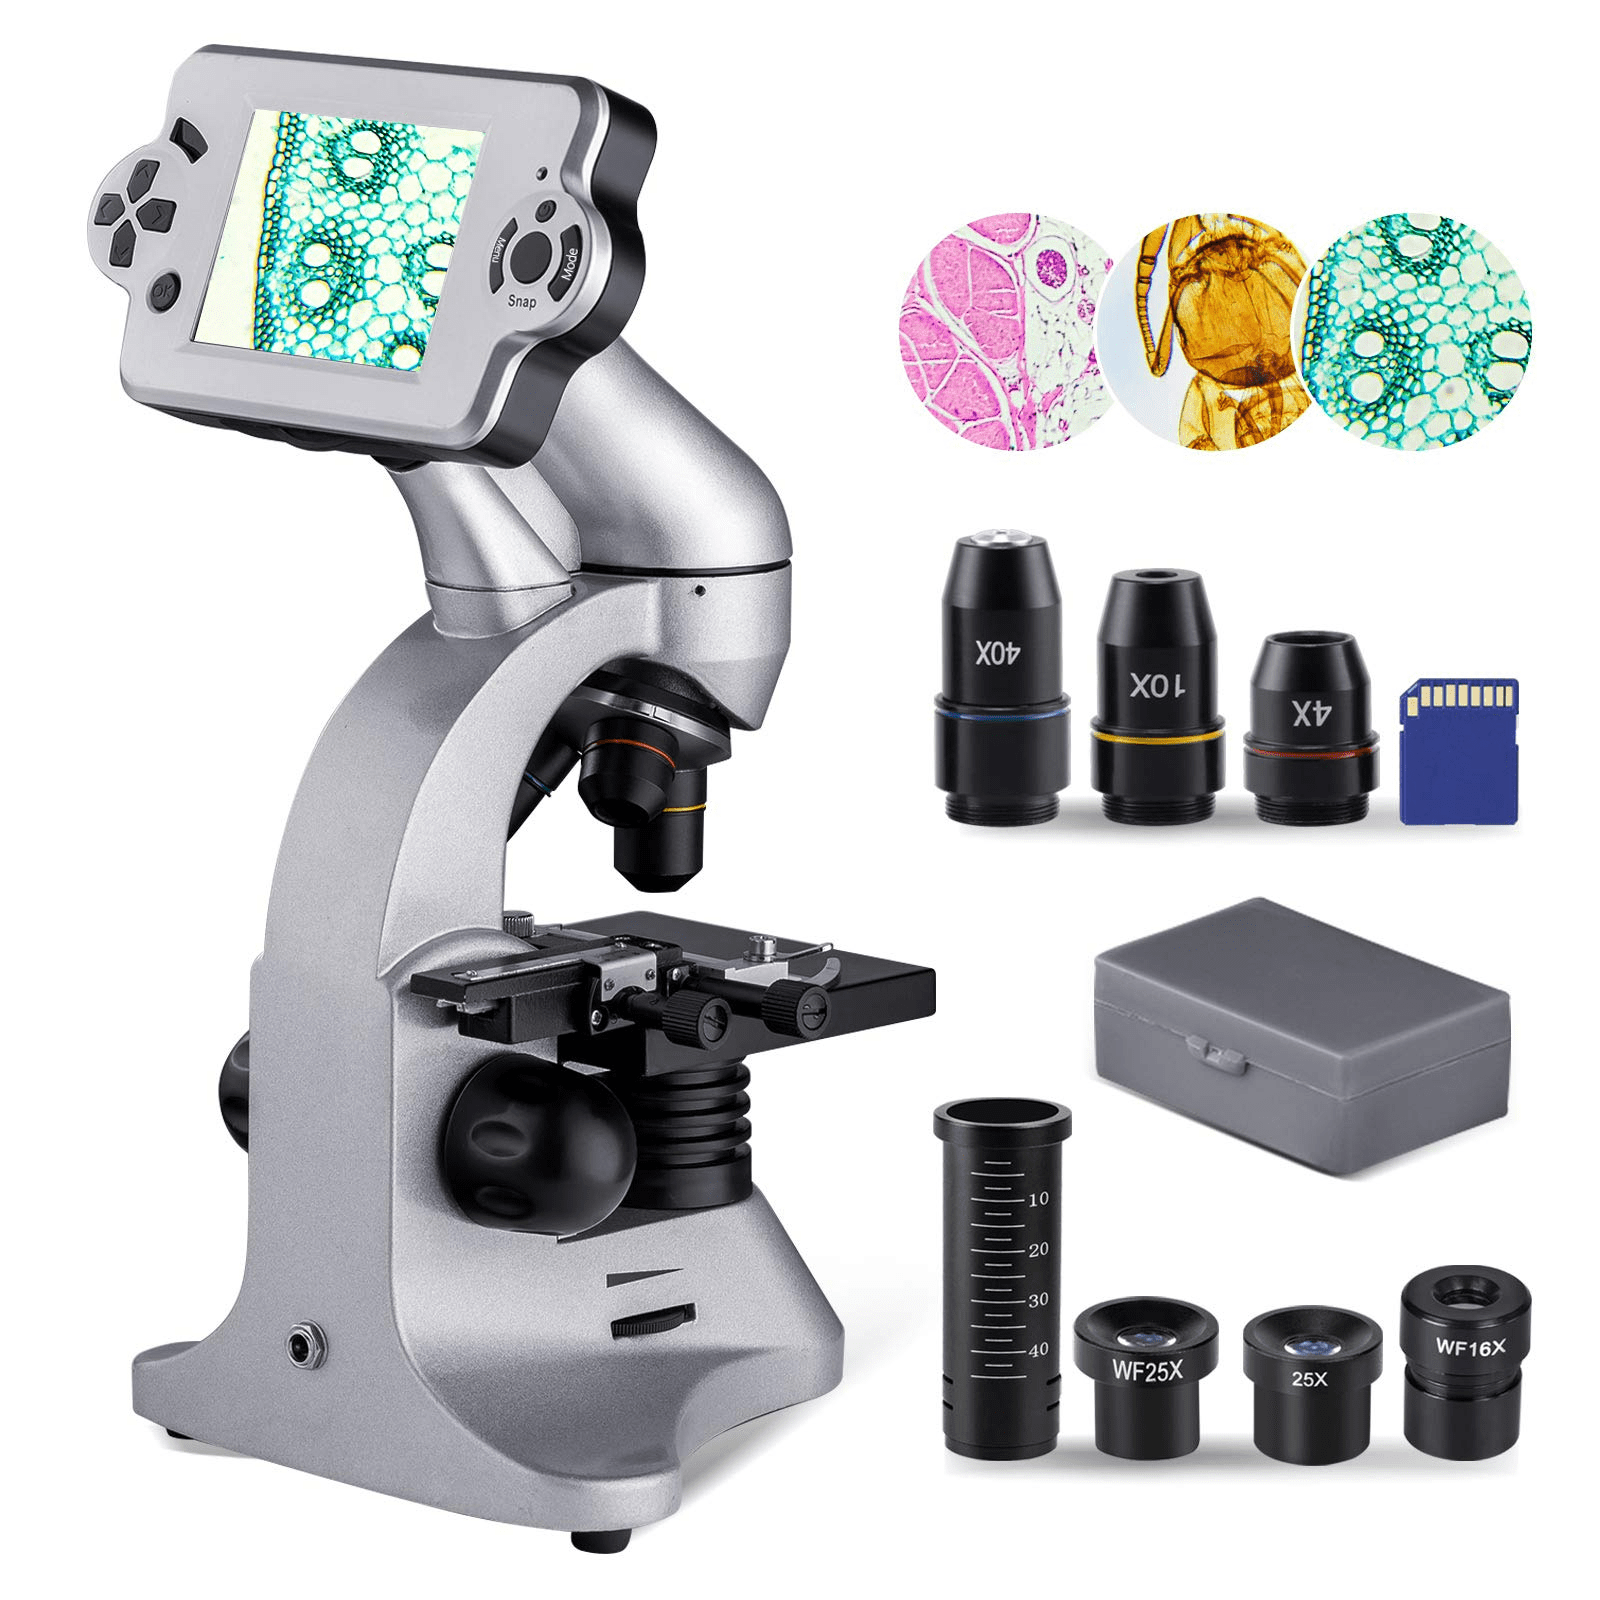 BWAM 1000x Magnification Endoscope 8 LED USB Digital Microscope Mini Camera Microscope with Foldable Stand Real 2MP Sensor Handheld Microscope Compatible with Windows xp/Vista/7 